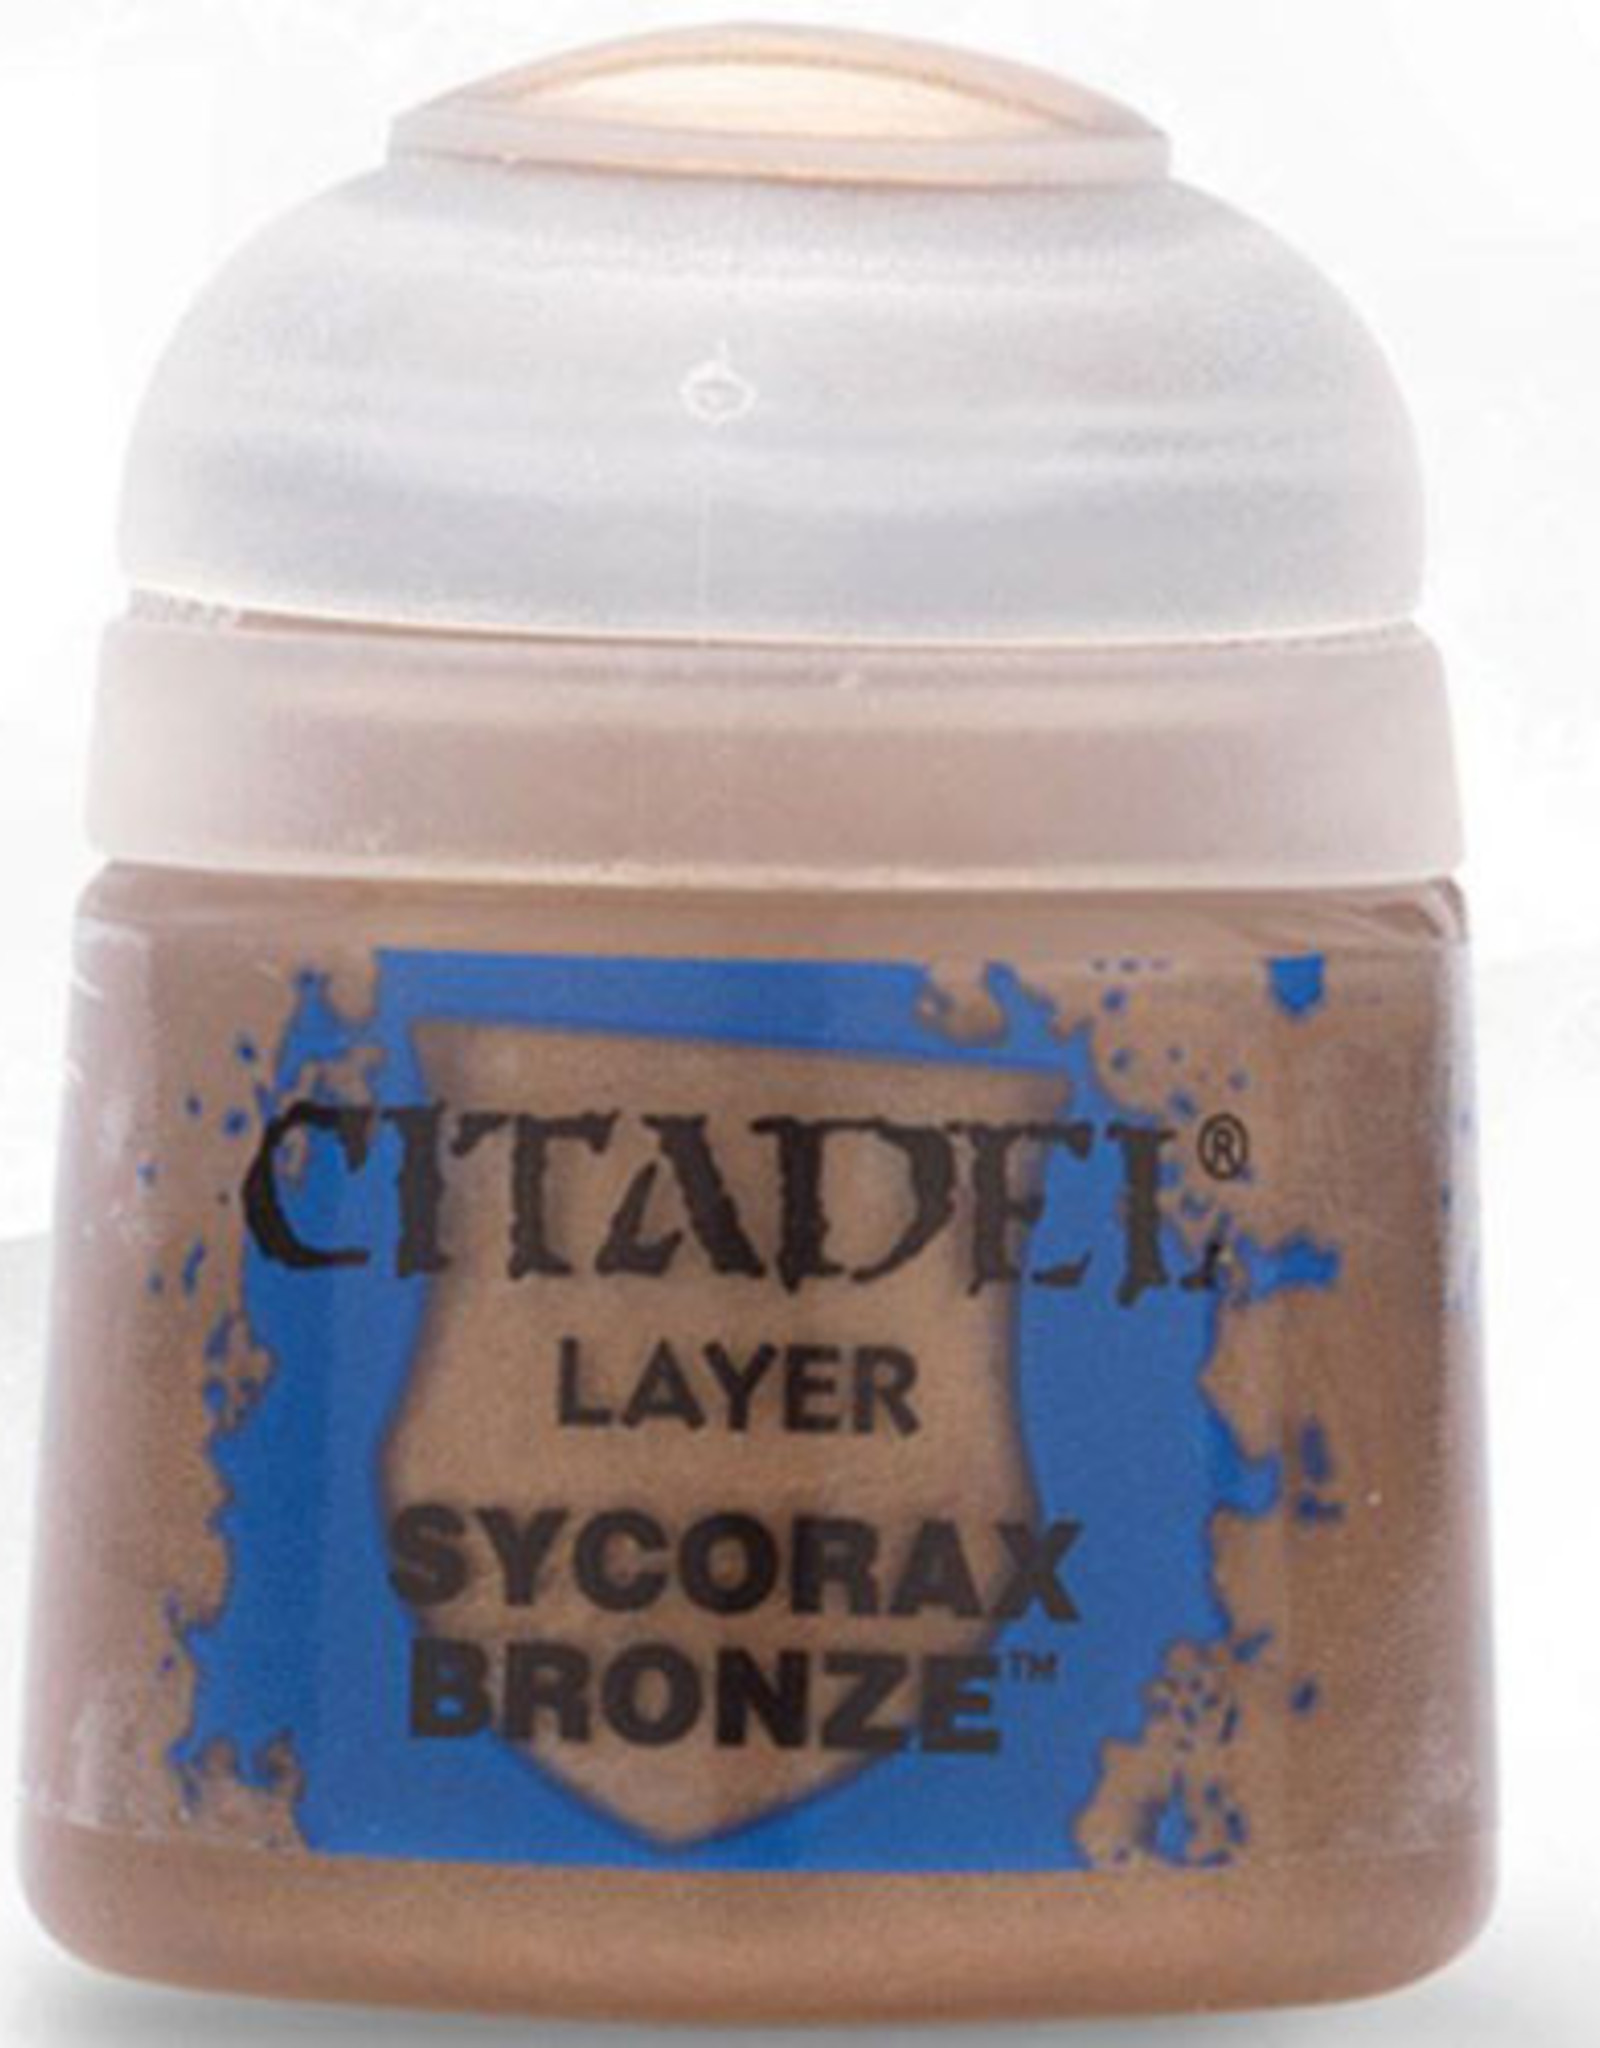 Games Workshop Citadel Layer: Sycorax Bronze